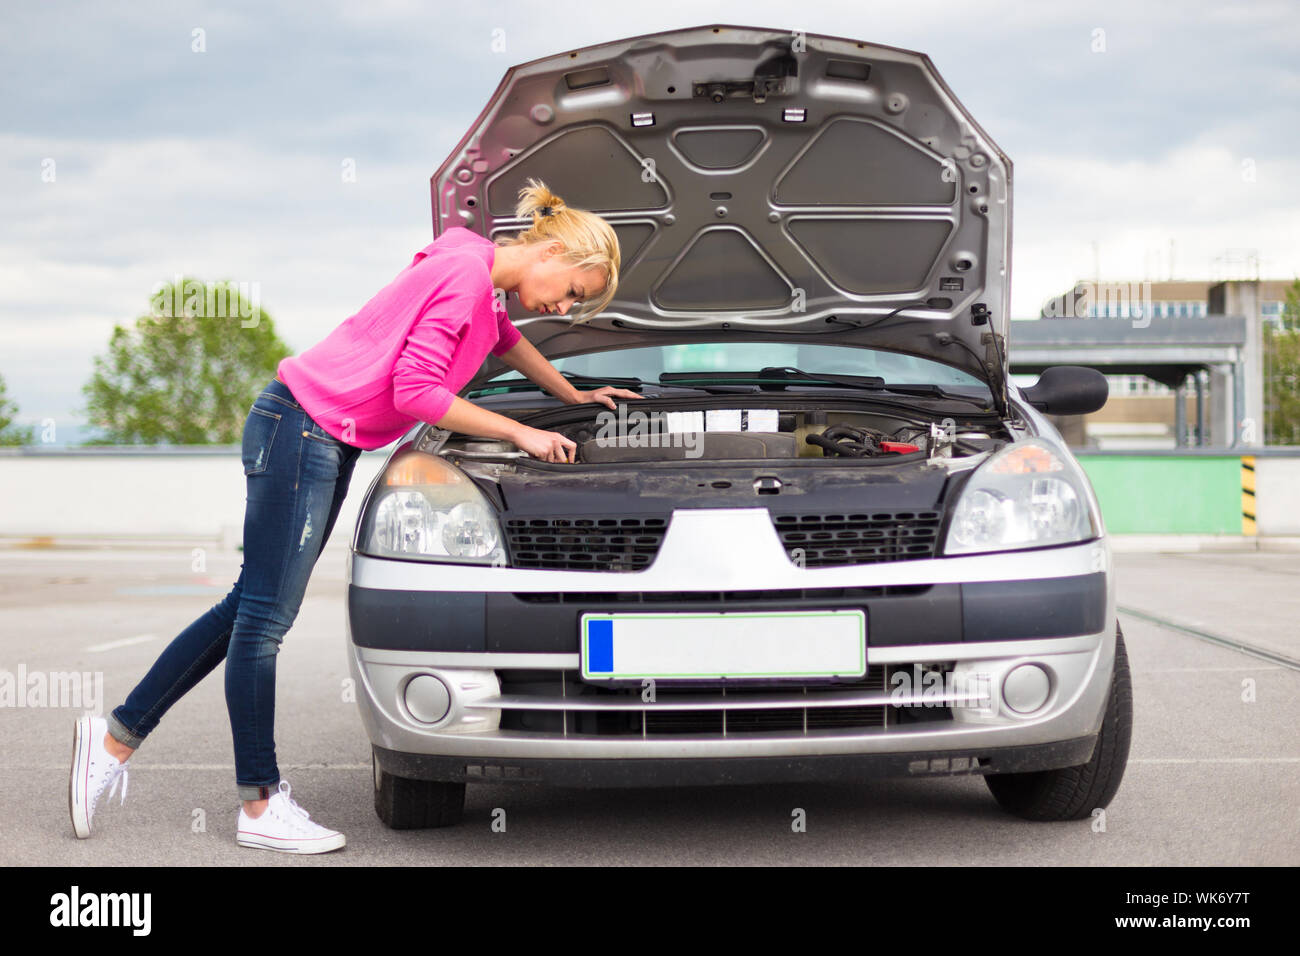 Woman inspecting broken car engine. Stock Photo